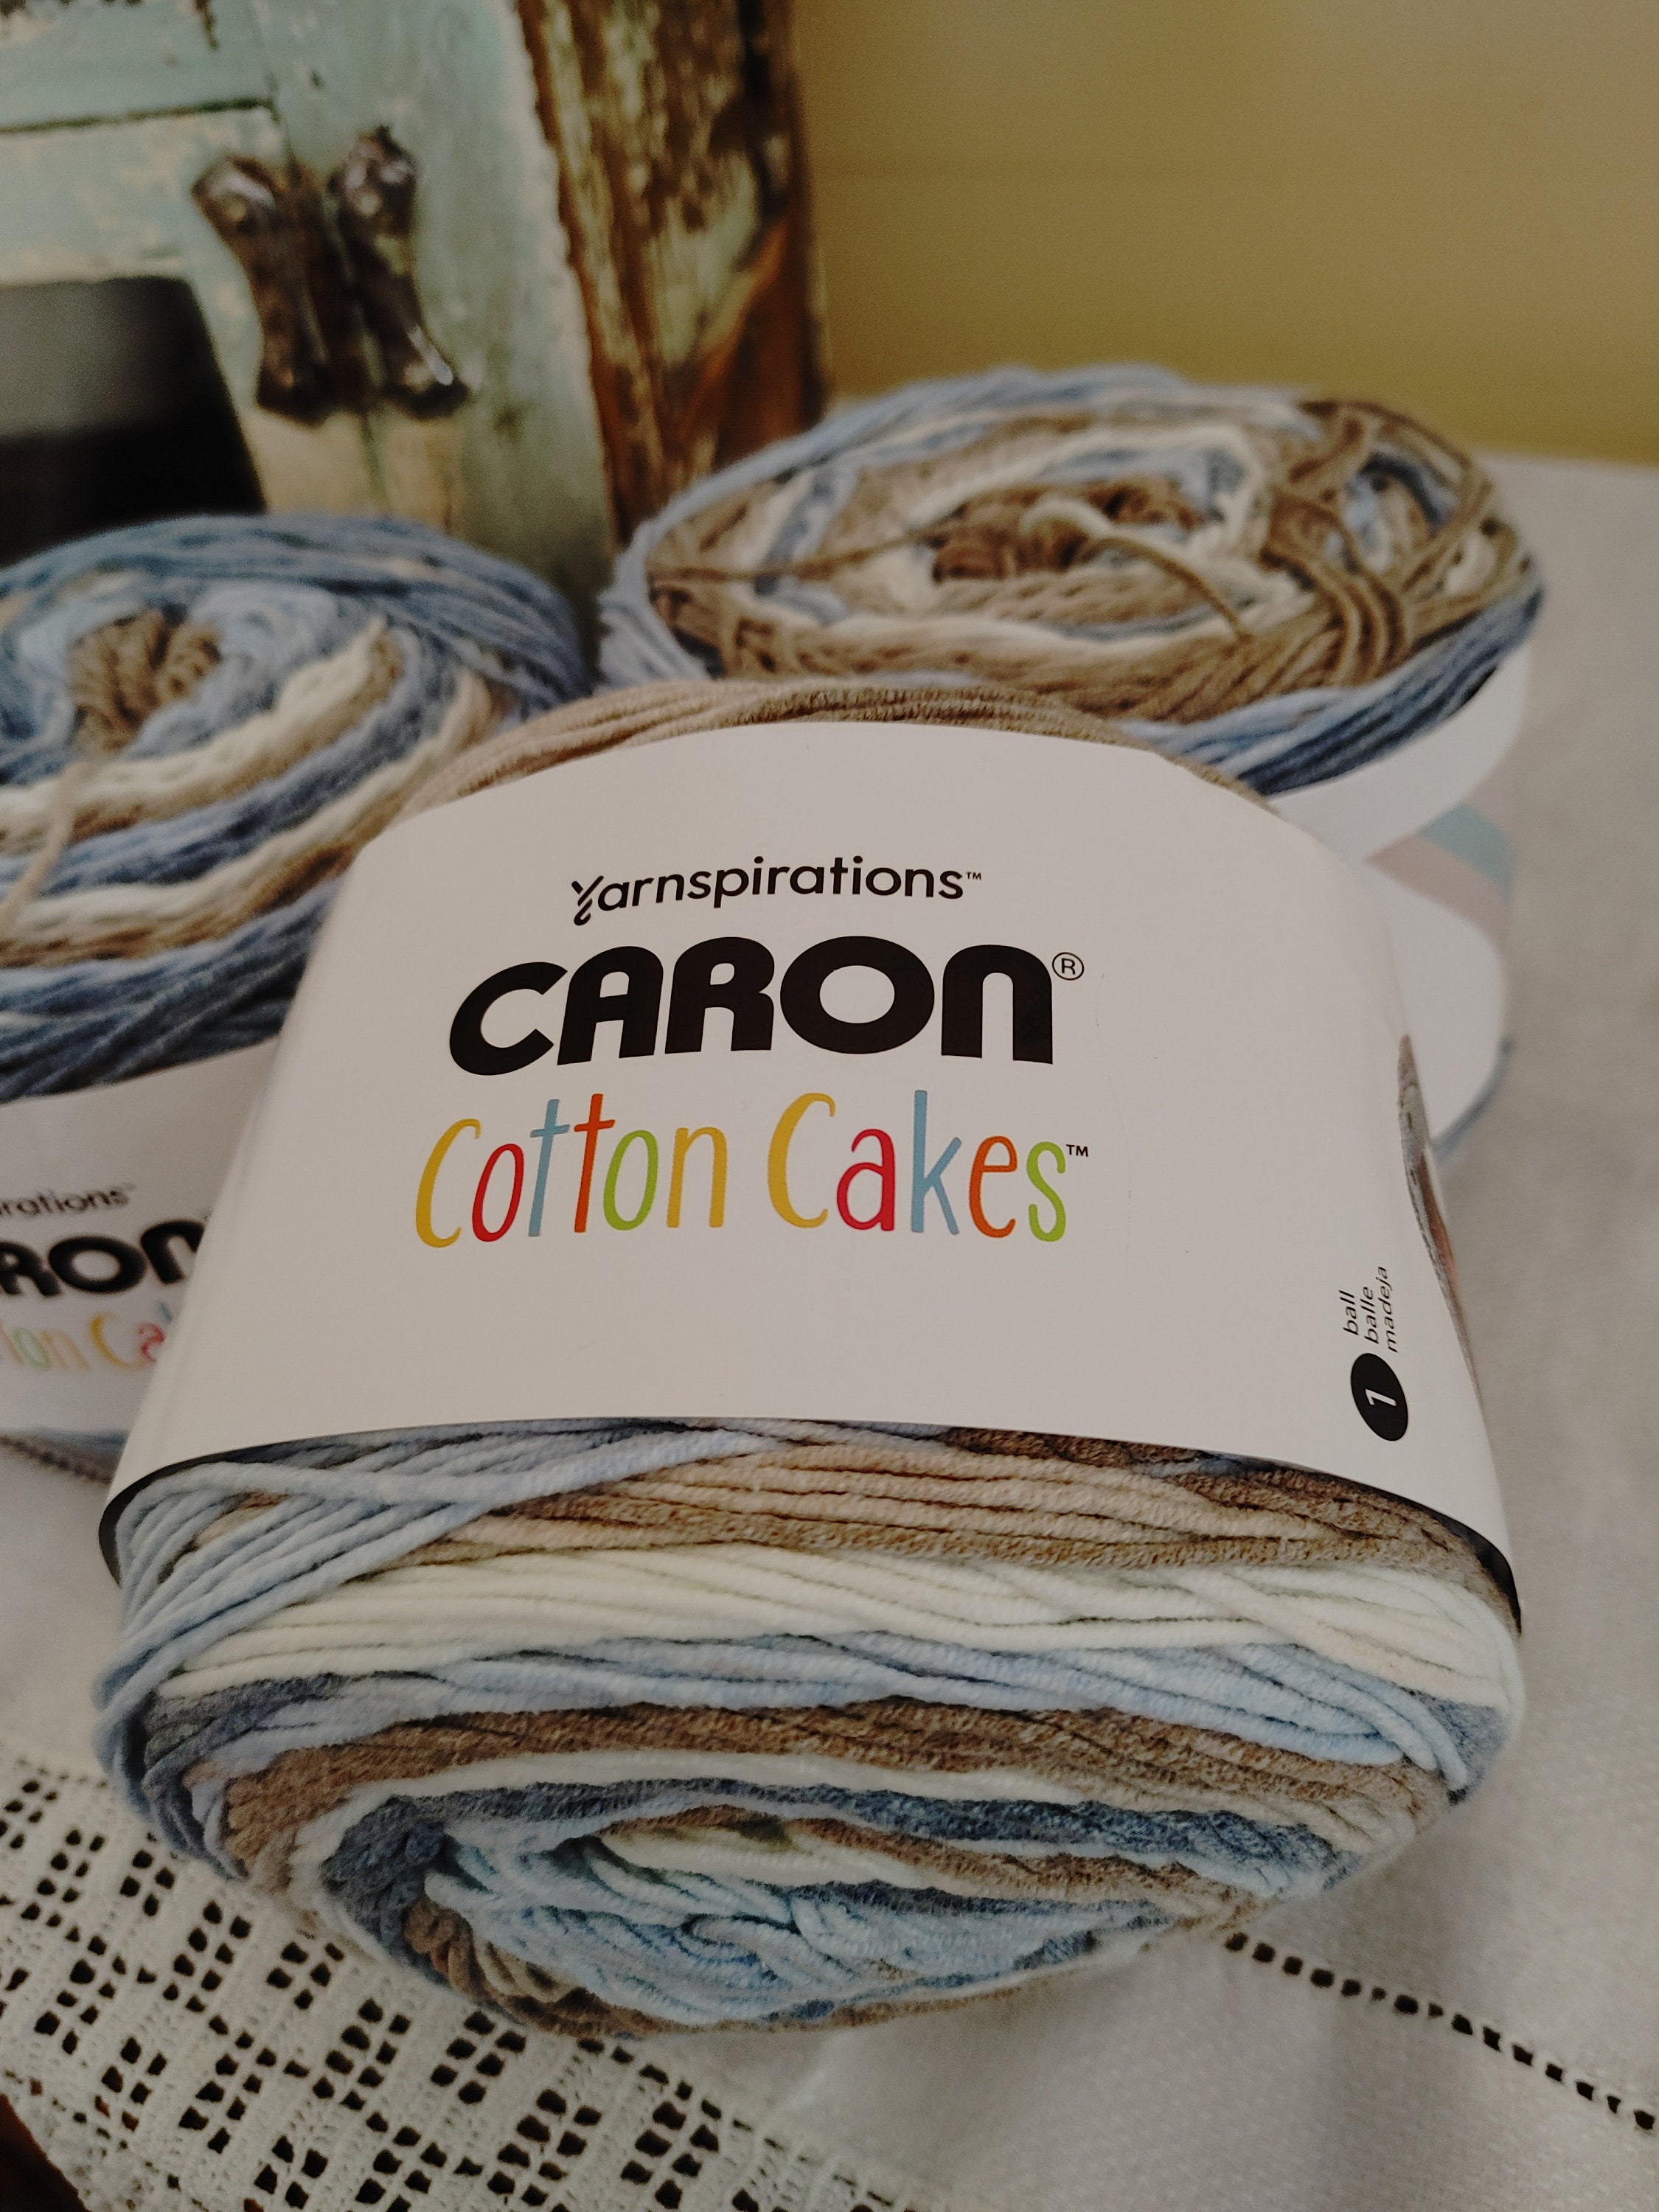 Caron Cotton Cakes Yarn - Frozen Yogurt - 8.8 oz